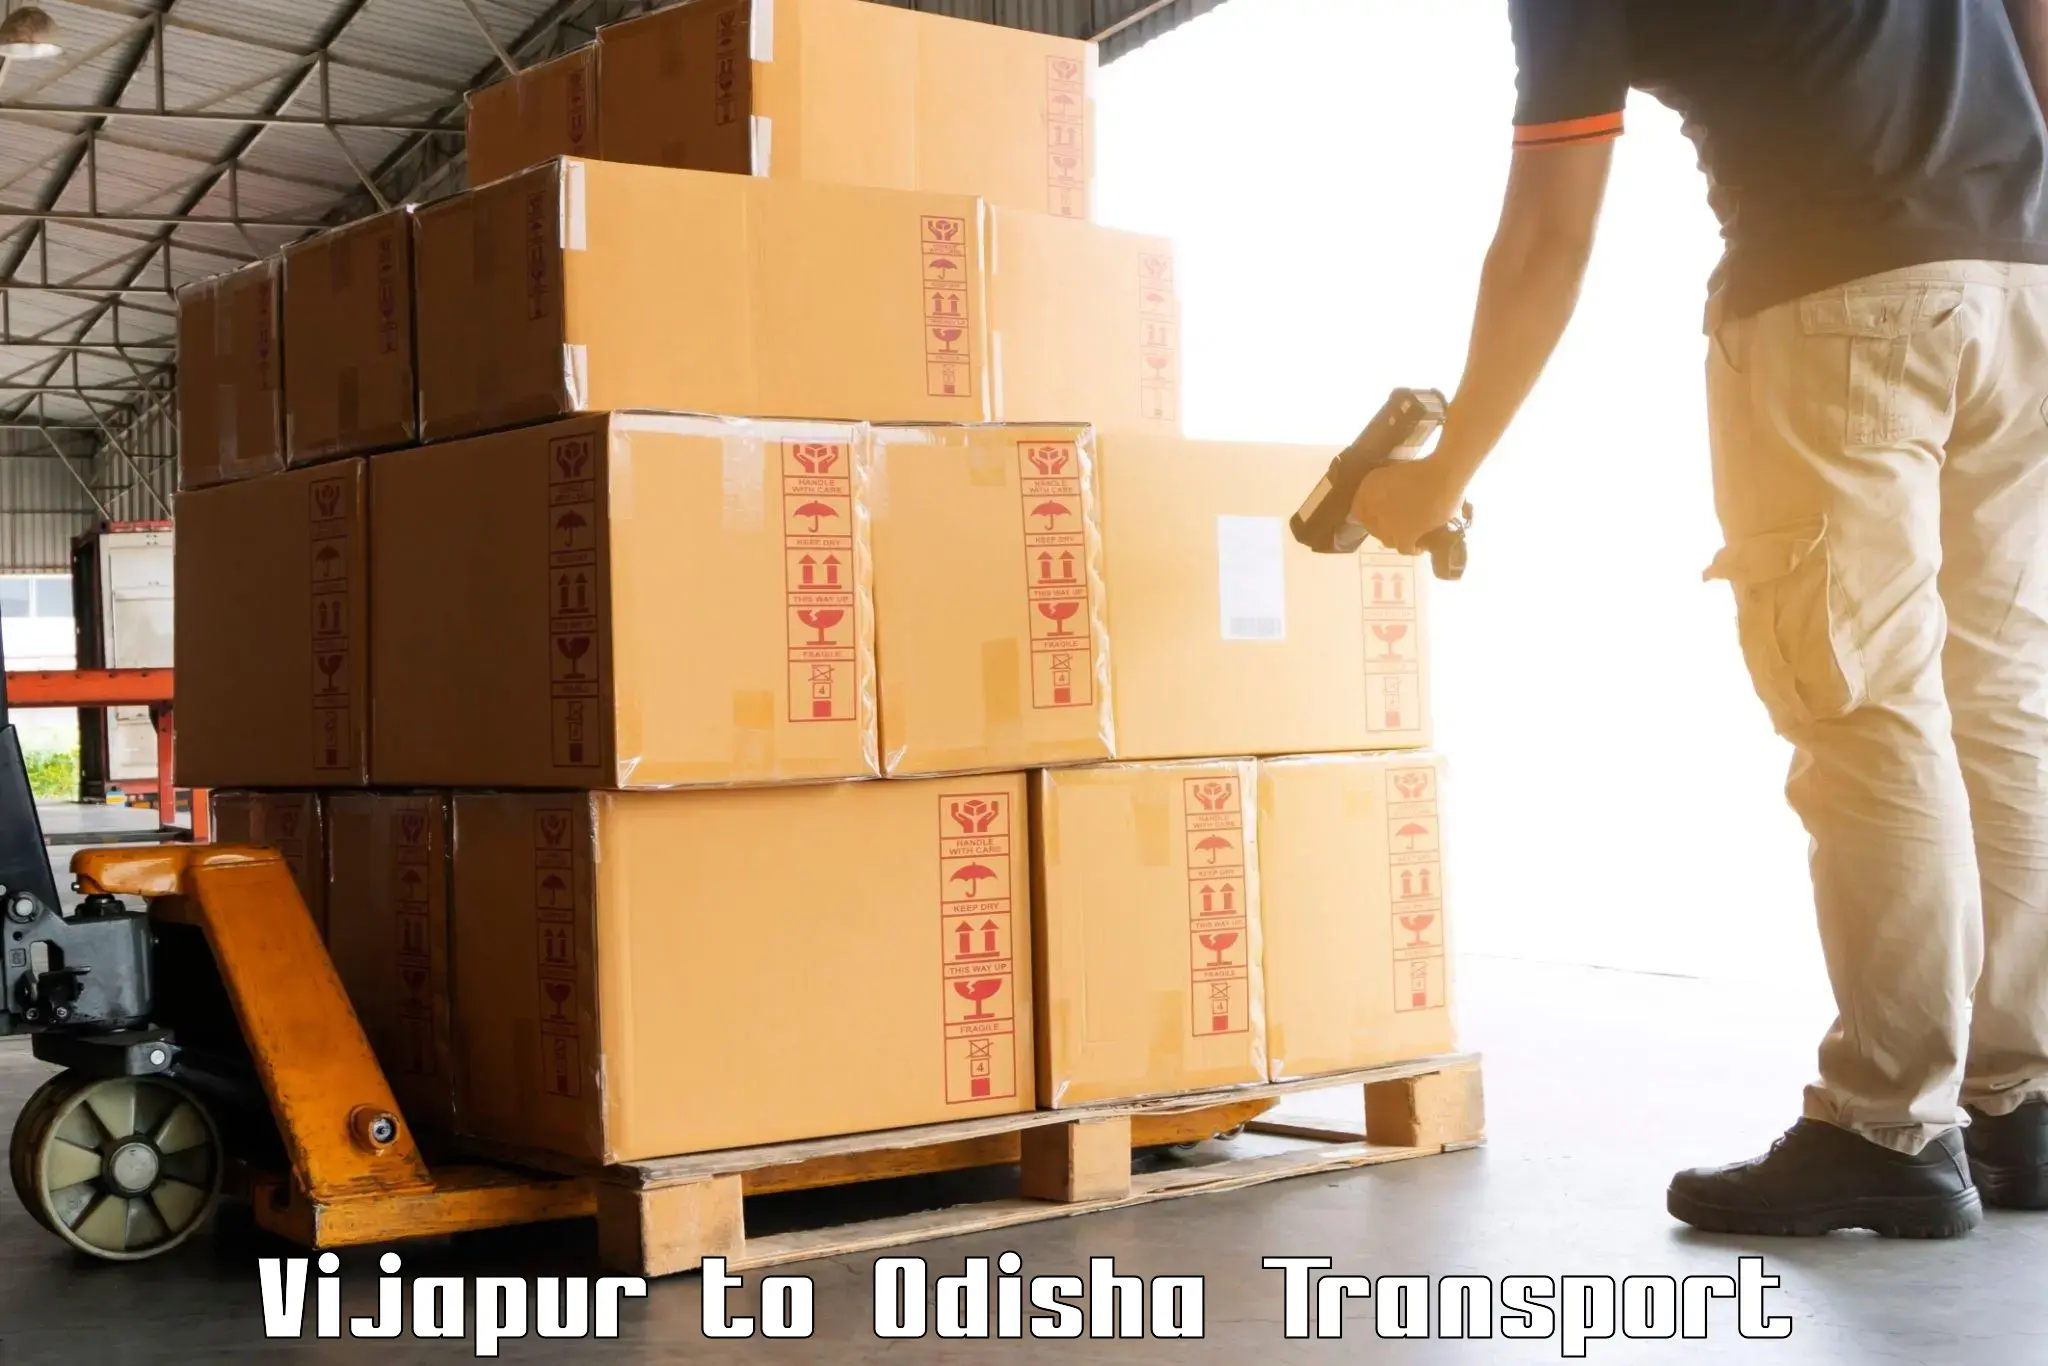 Transport in sharing Vijapur to Binka